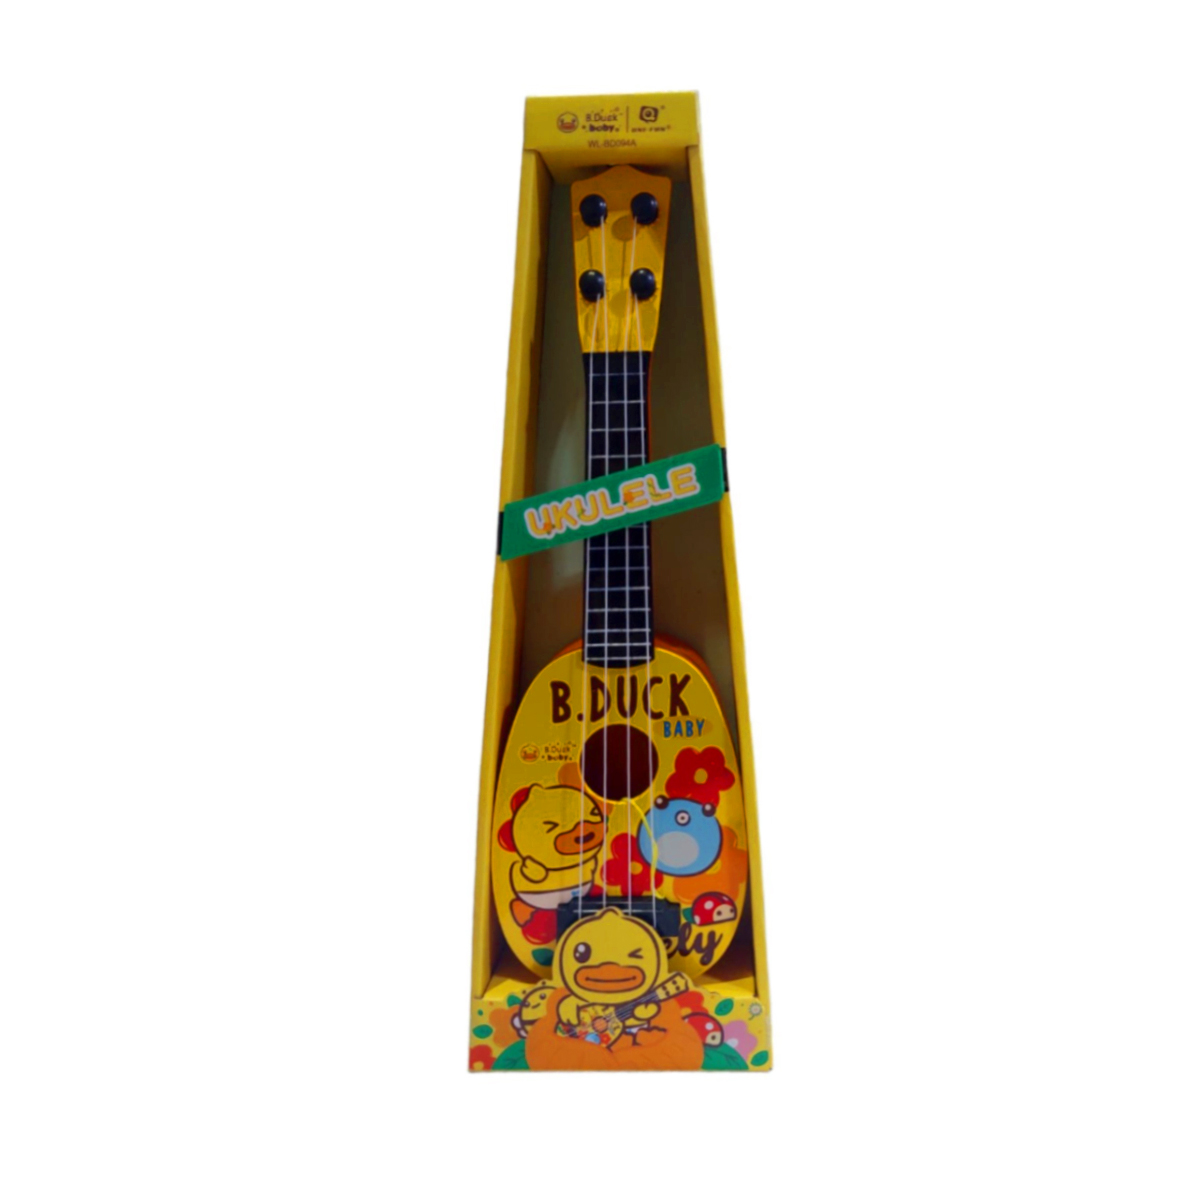 Ukelele Juguete Musical para Niños B.duck